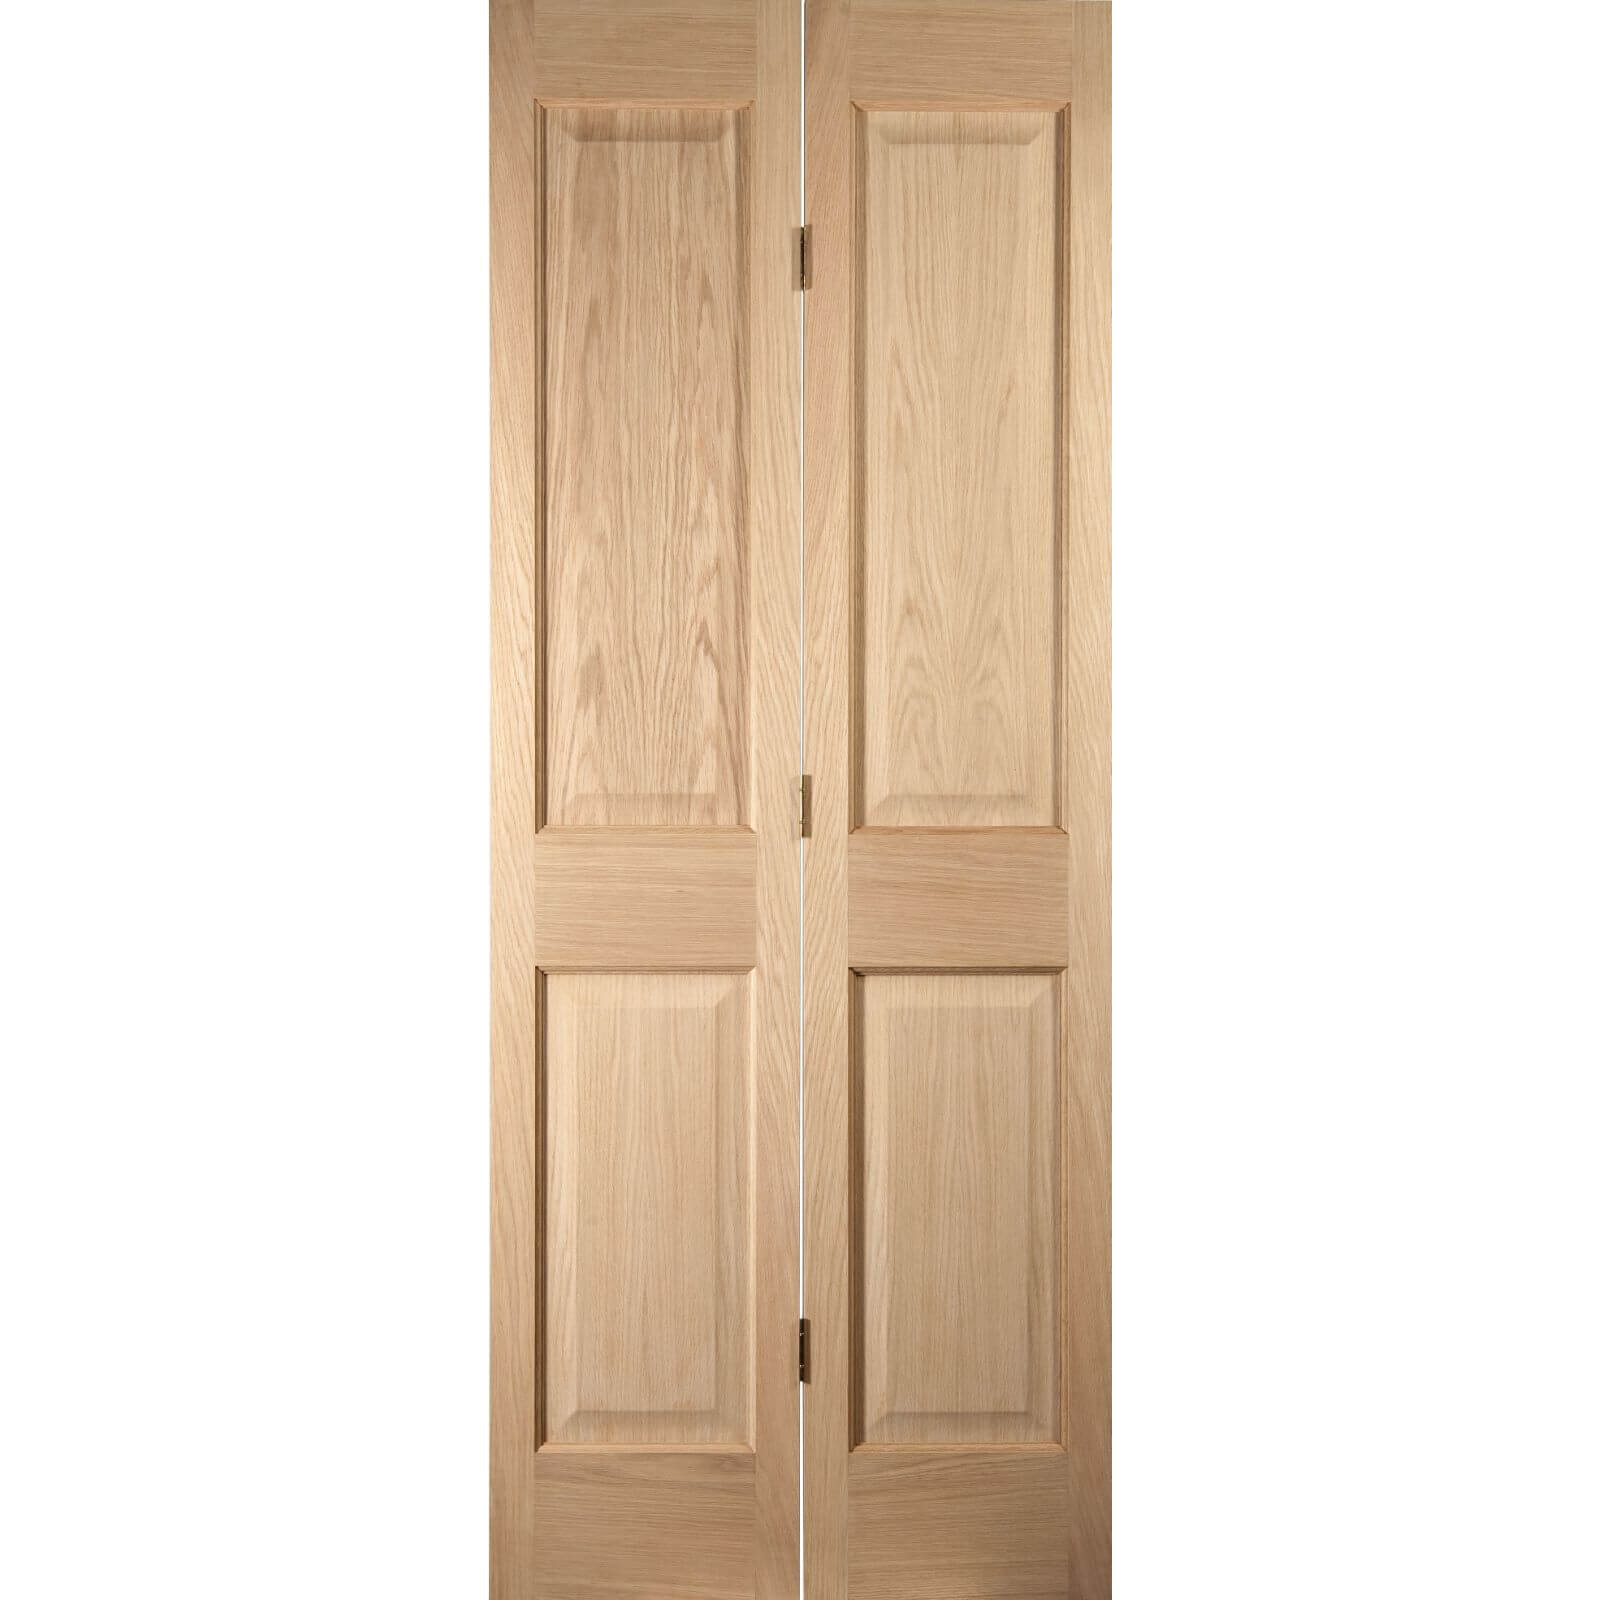 Photo of 4 Panel White Oak Veneer Internal Bi-fold Door - 762mm Wide